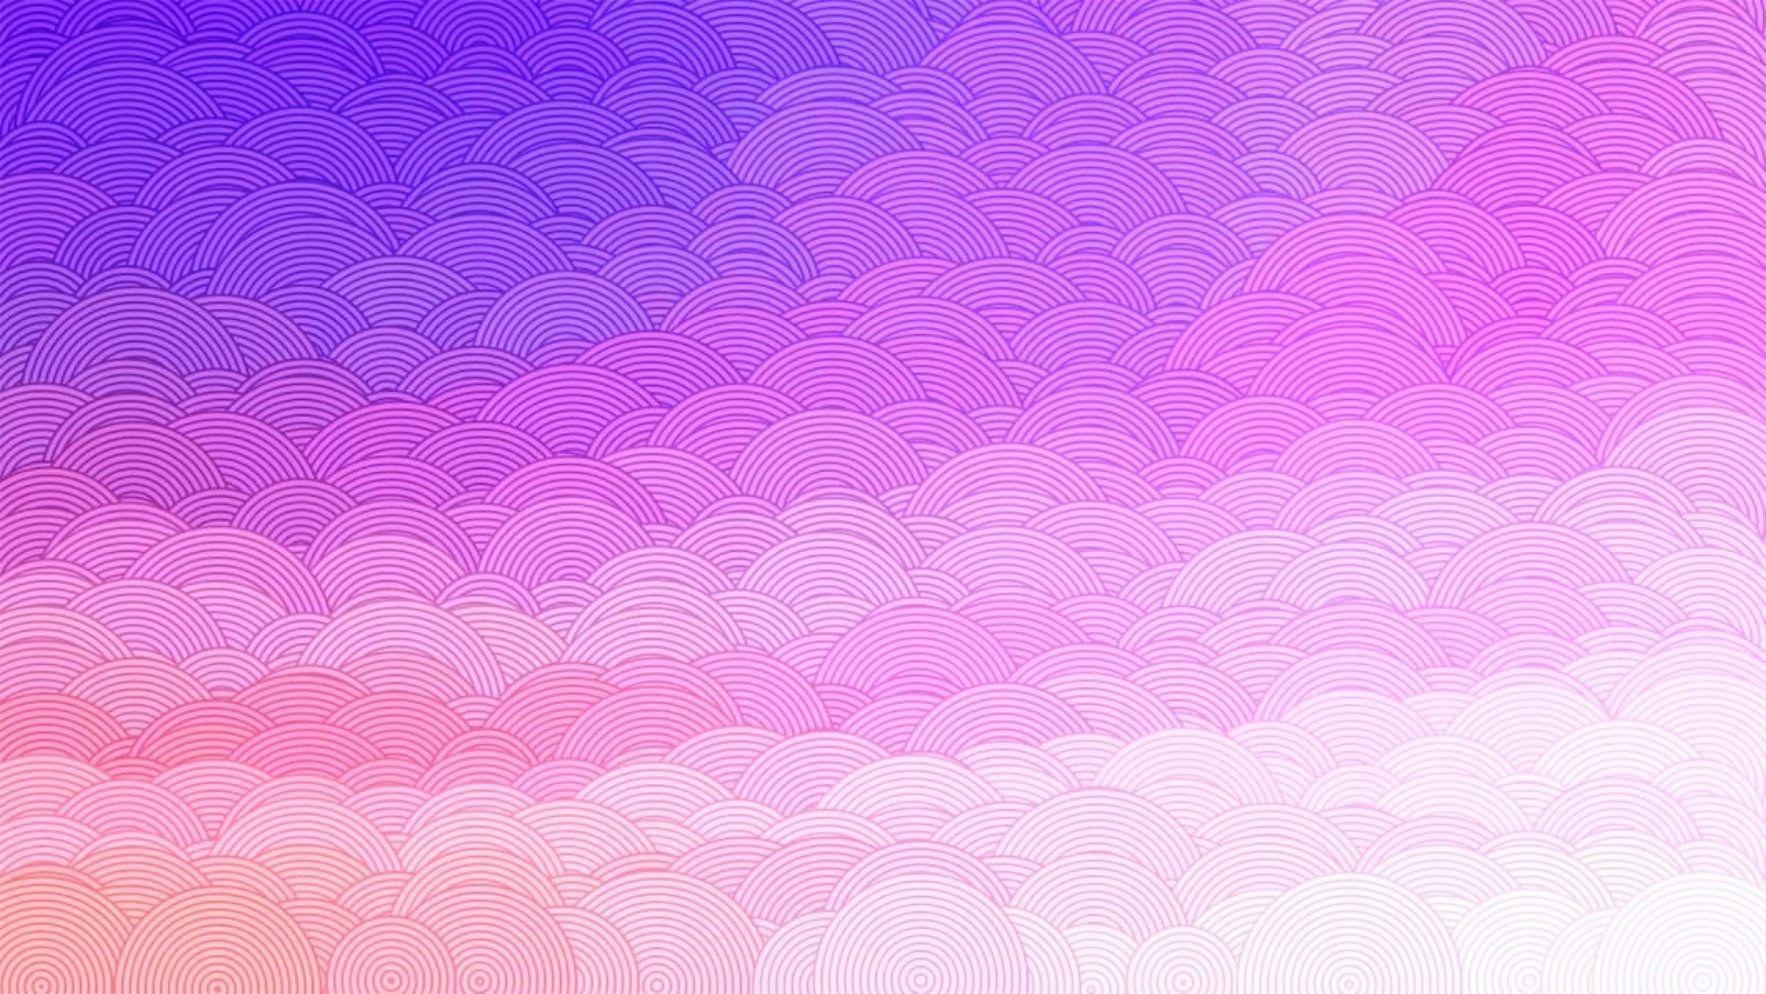  Tumblr  Wallpapers  Purple  Wallpaper  Cave